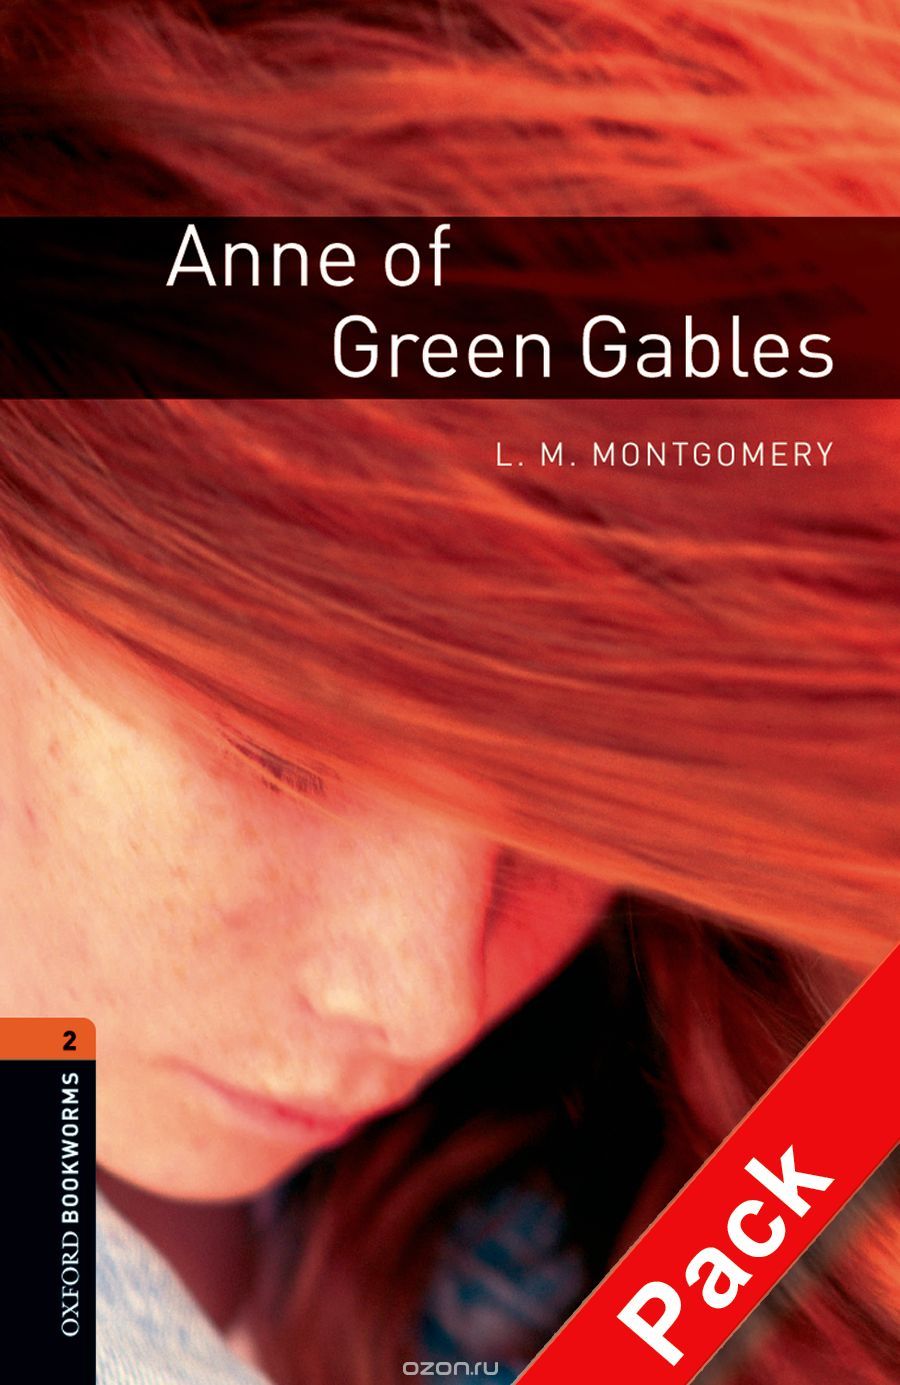 Скачать книгу "OXFORD bookworms library 2: ANNE OF GREEN GABLES PACK(AM) 3E"